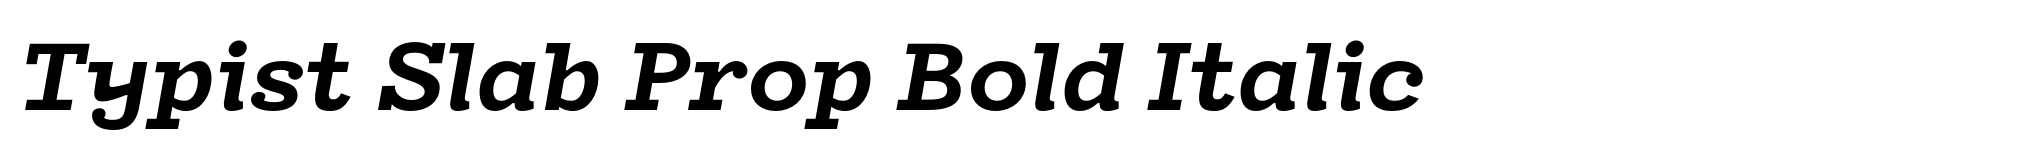 Typist Slab Prop Bold Italic image